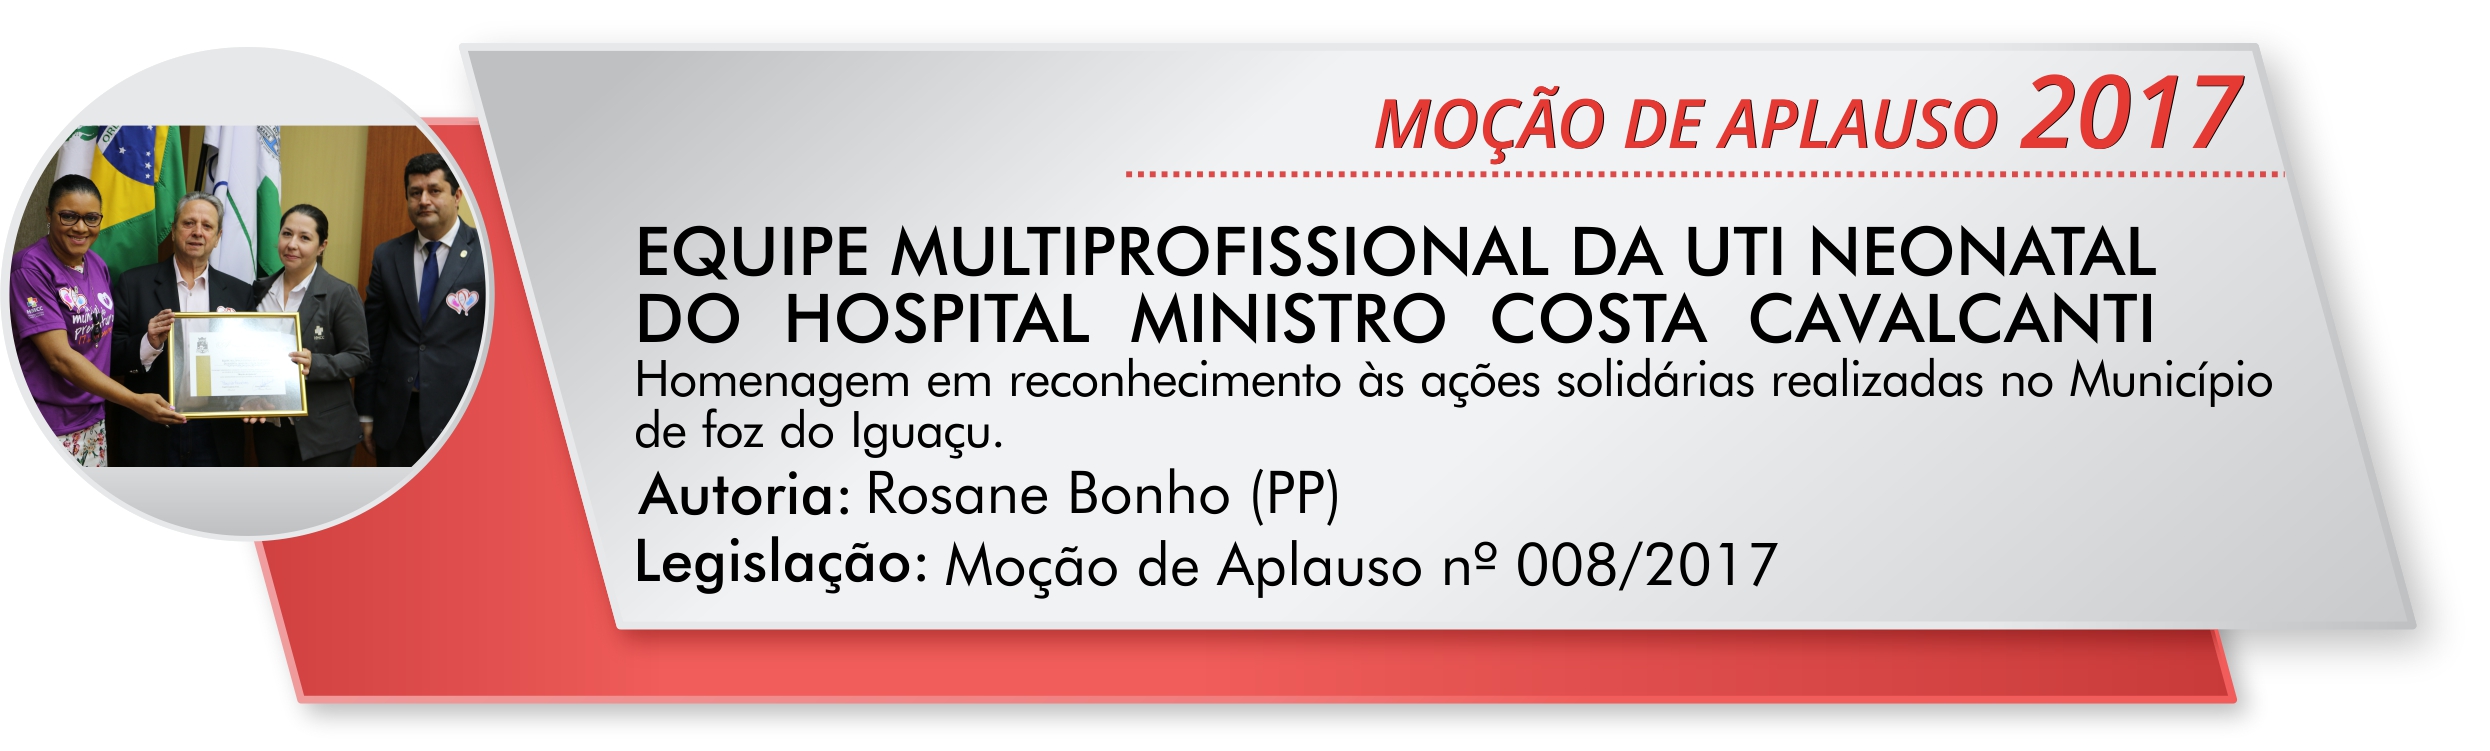 Equipe Multiprofissional que atua na UTI Neonatal do Hospital Ministro Costa Cavalcanti